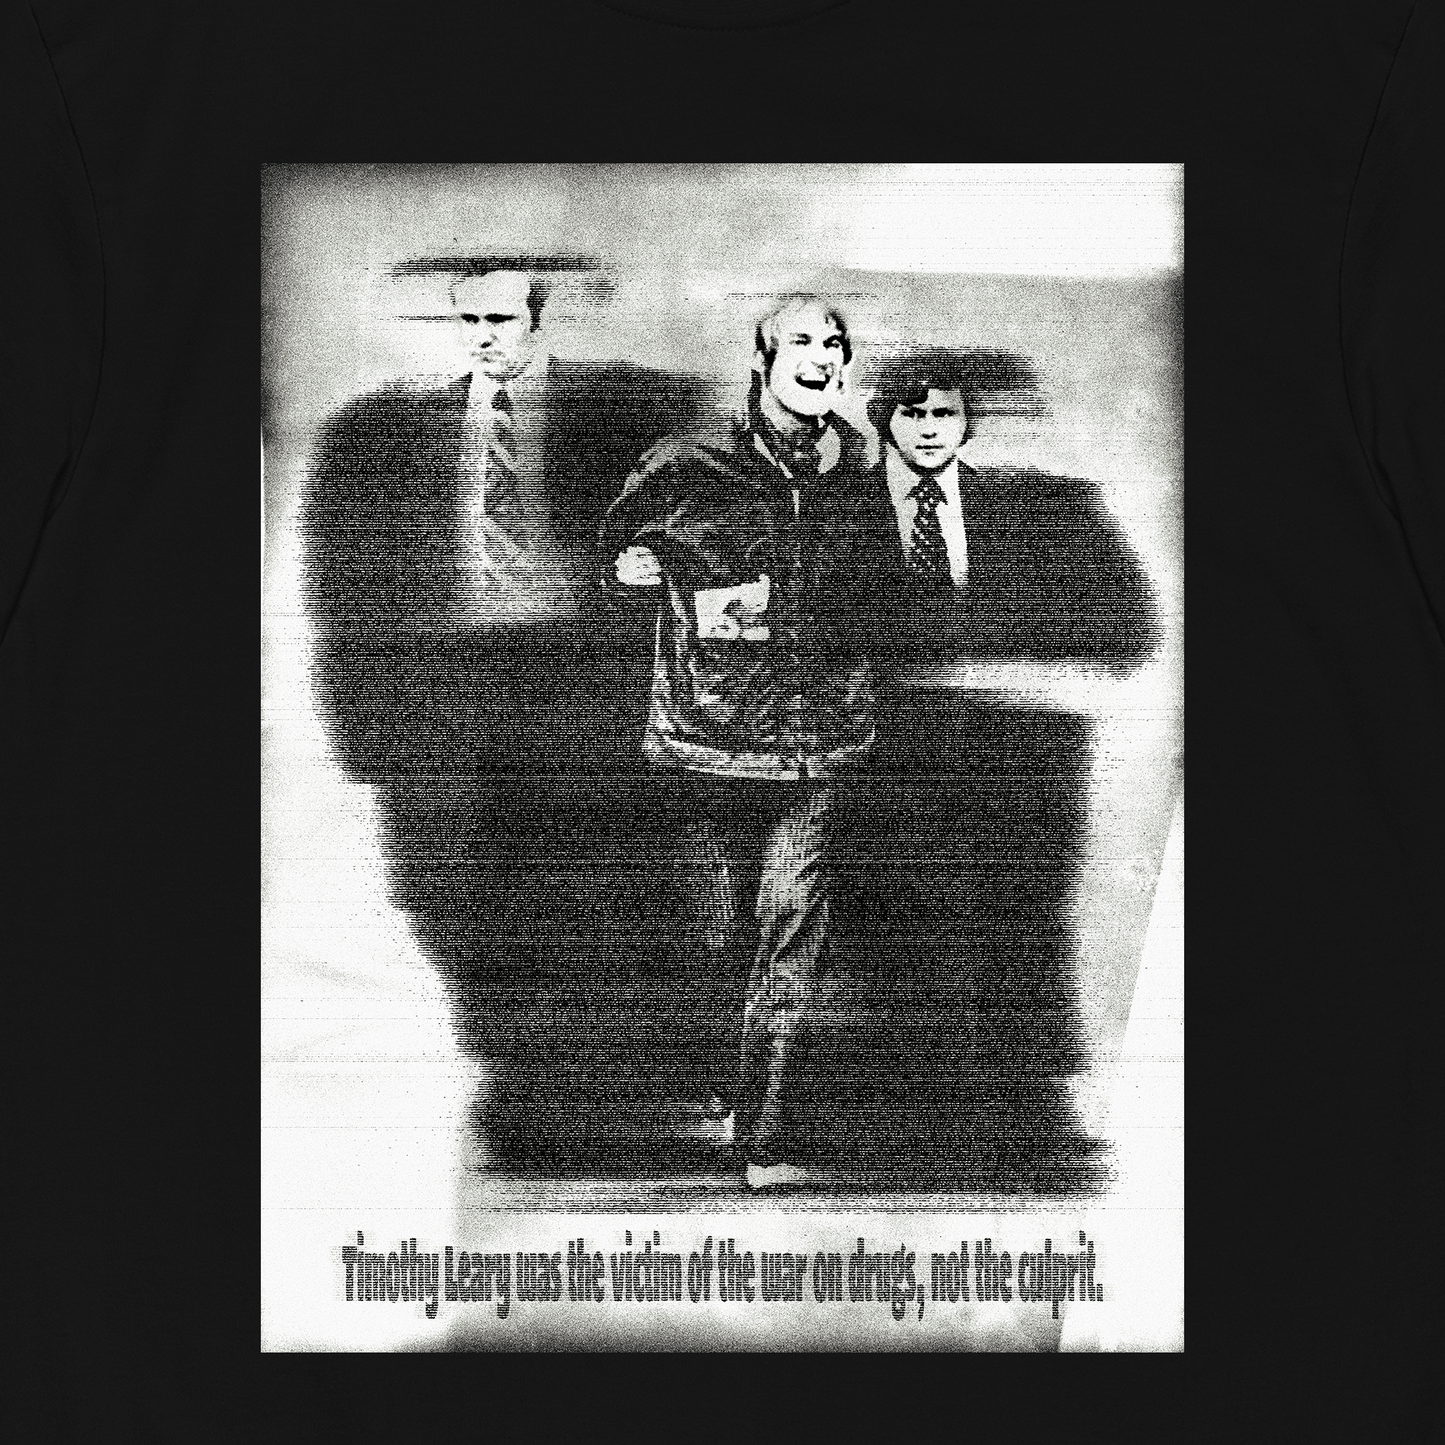 Timothy Leary Graphic Unisex Sweatshirt